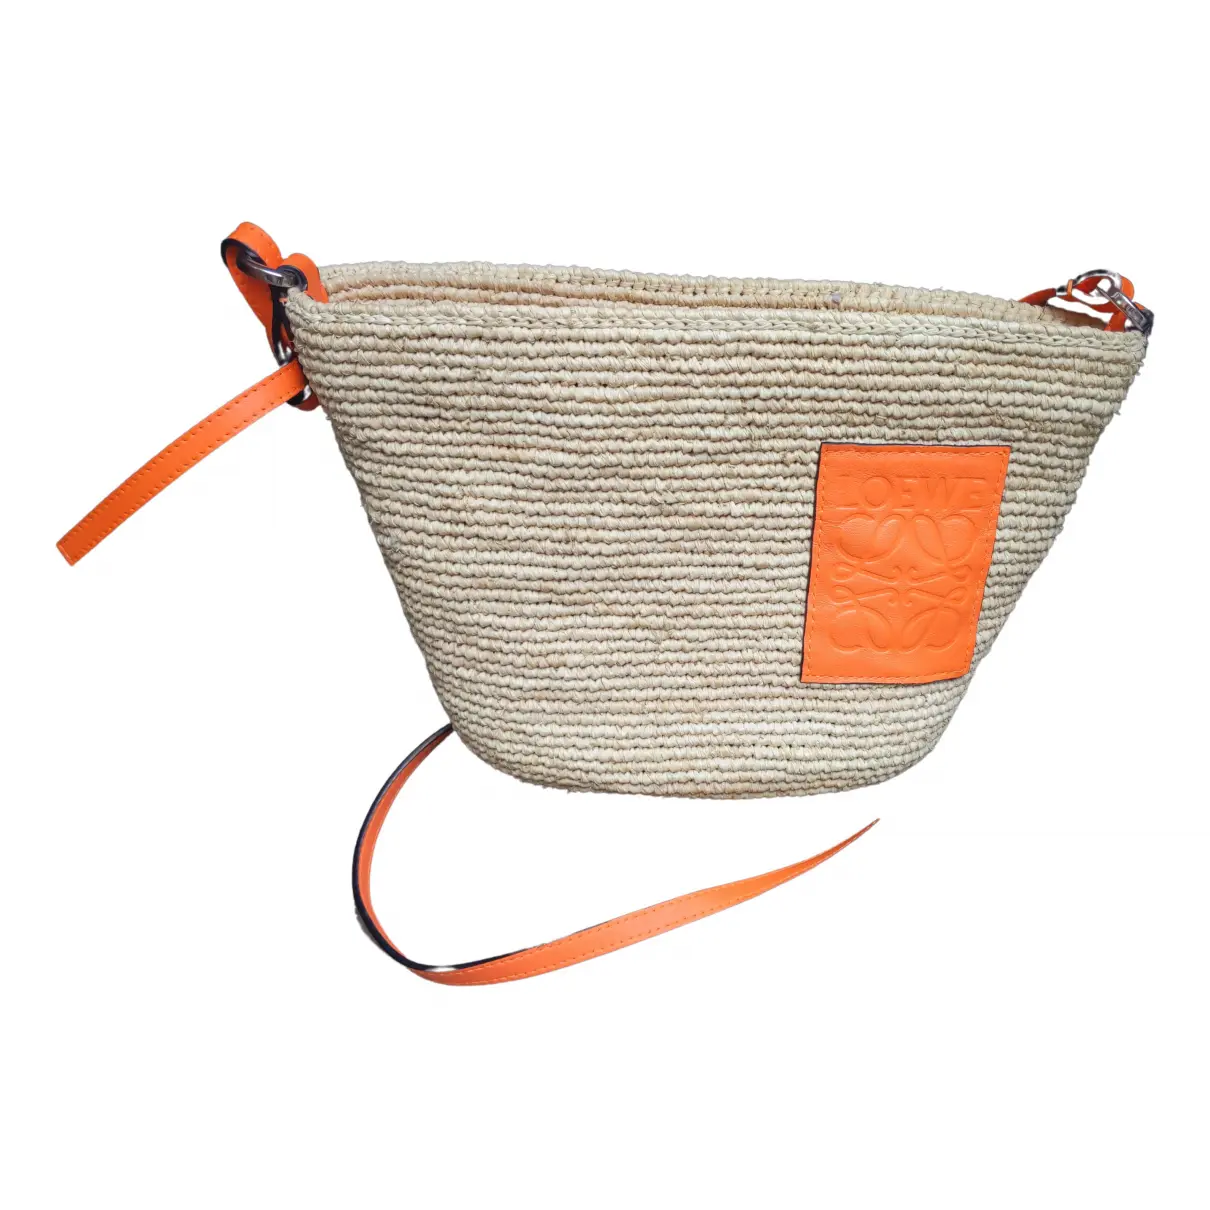 Basket Bag crossbody bag Loewe